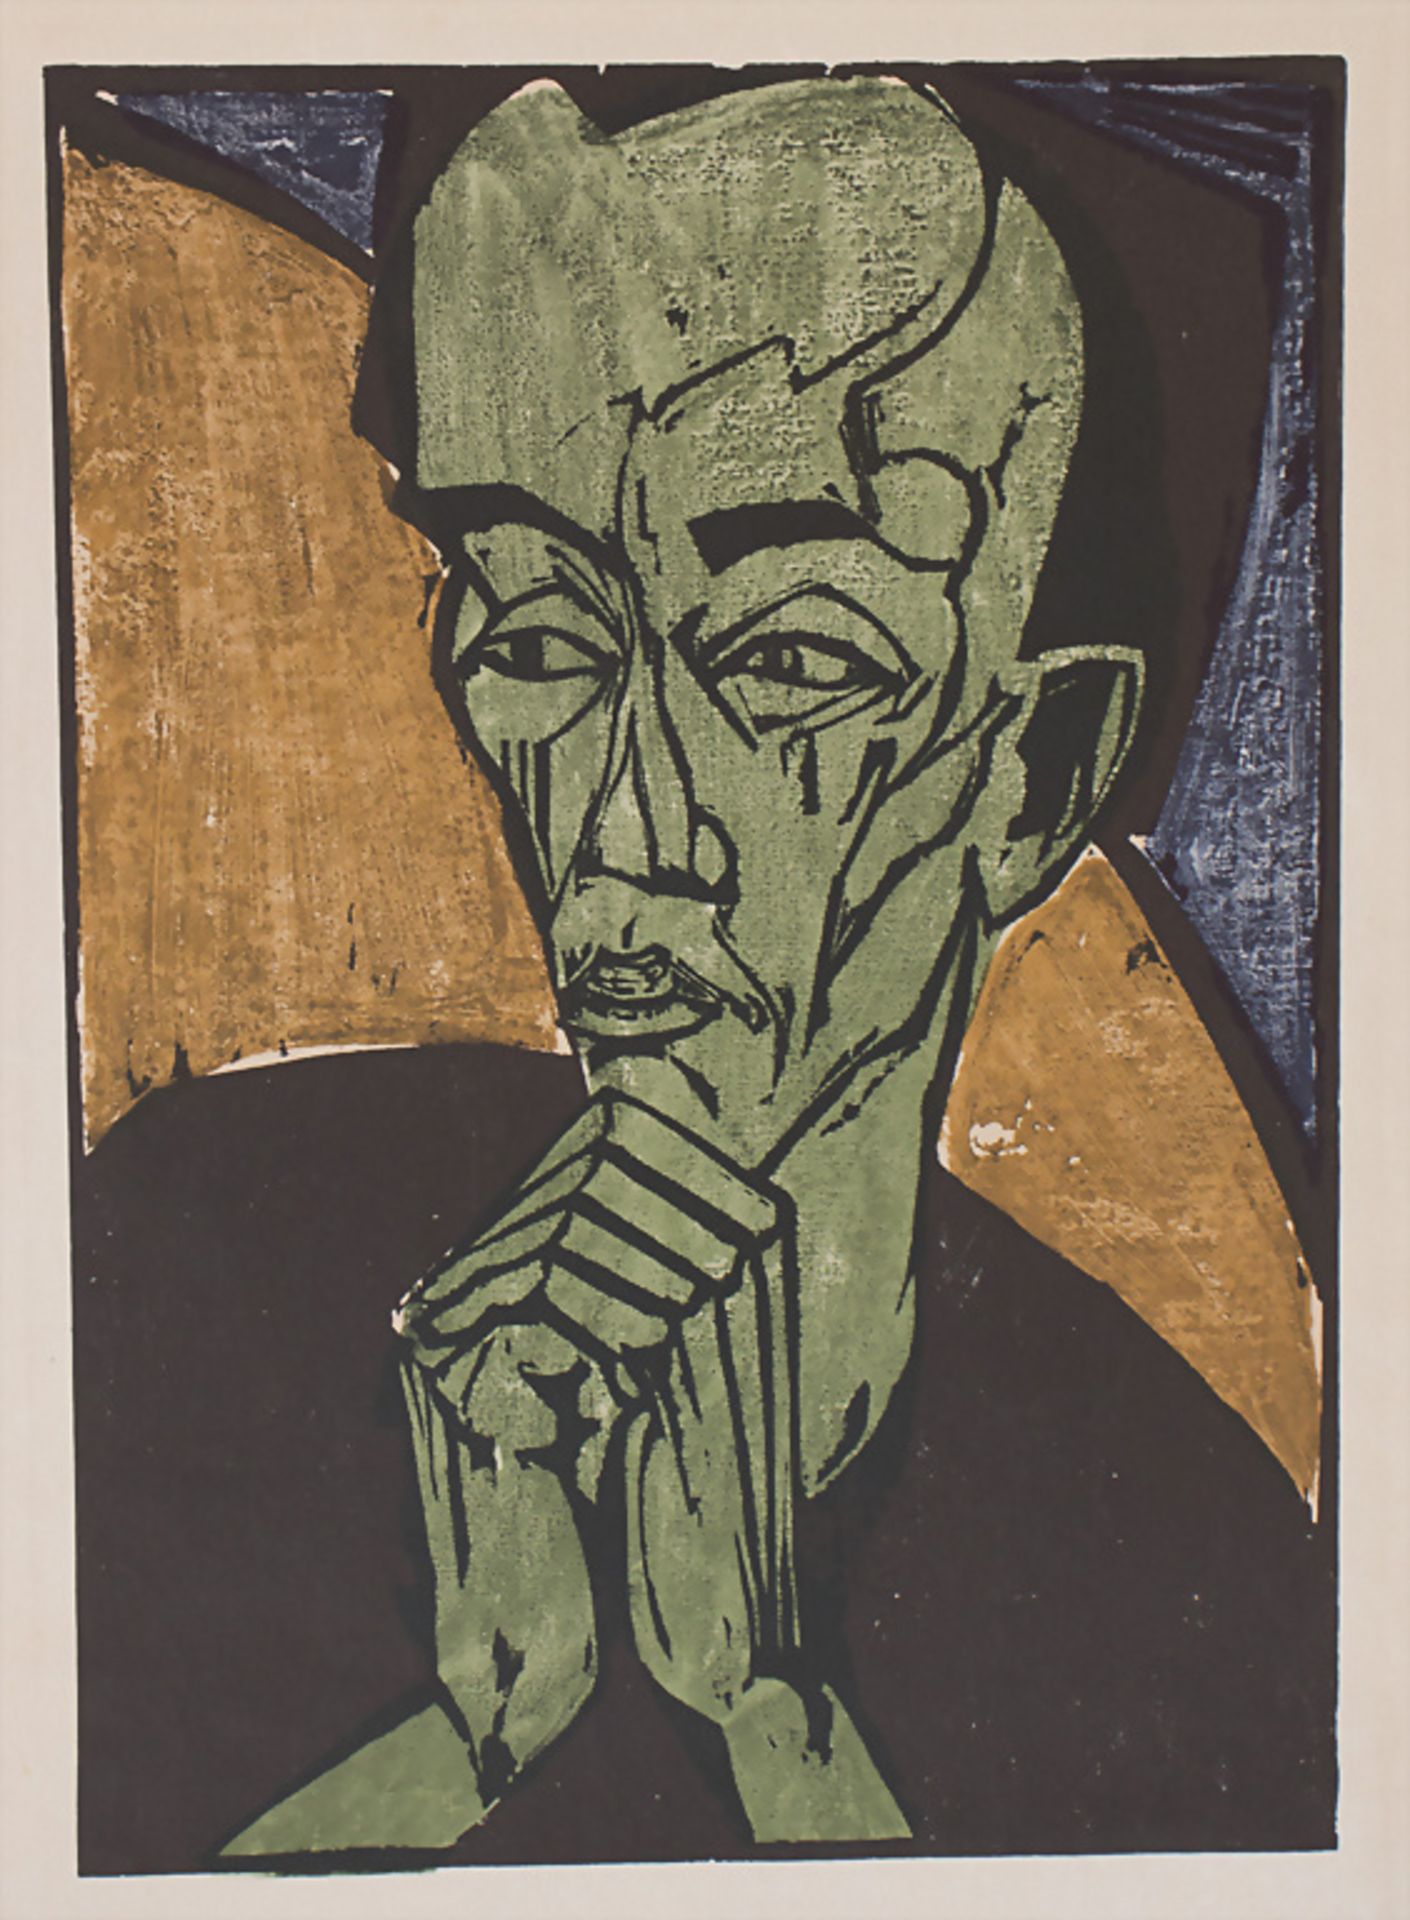 nach Erich Heckel (1883-1970), 'Männerbildnis' / 'A portrait of a man', Entwurf 1918